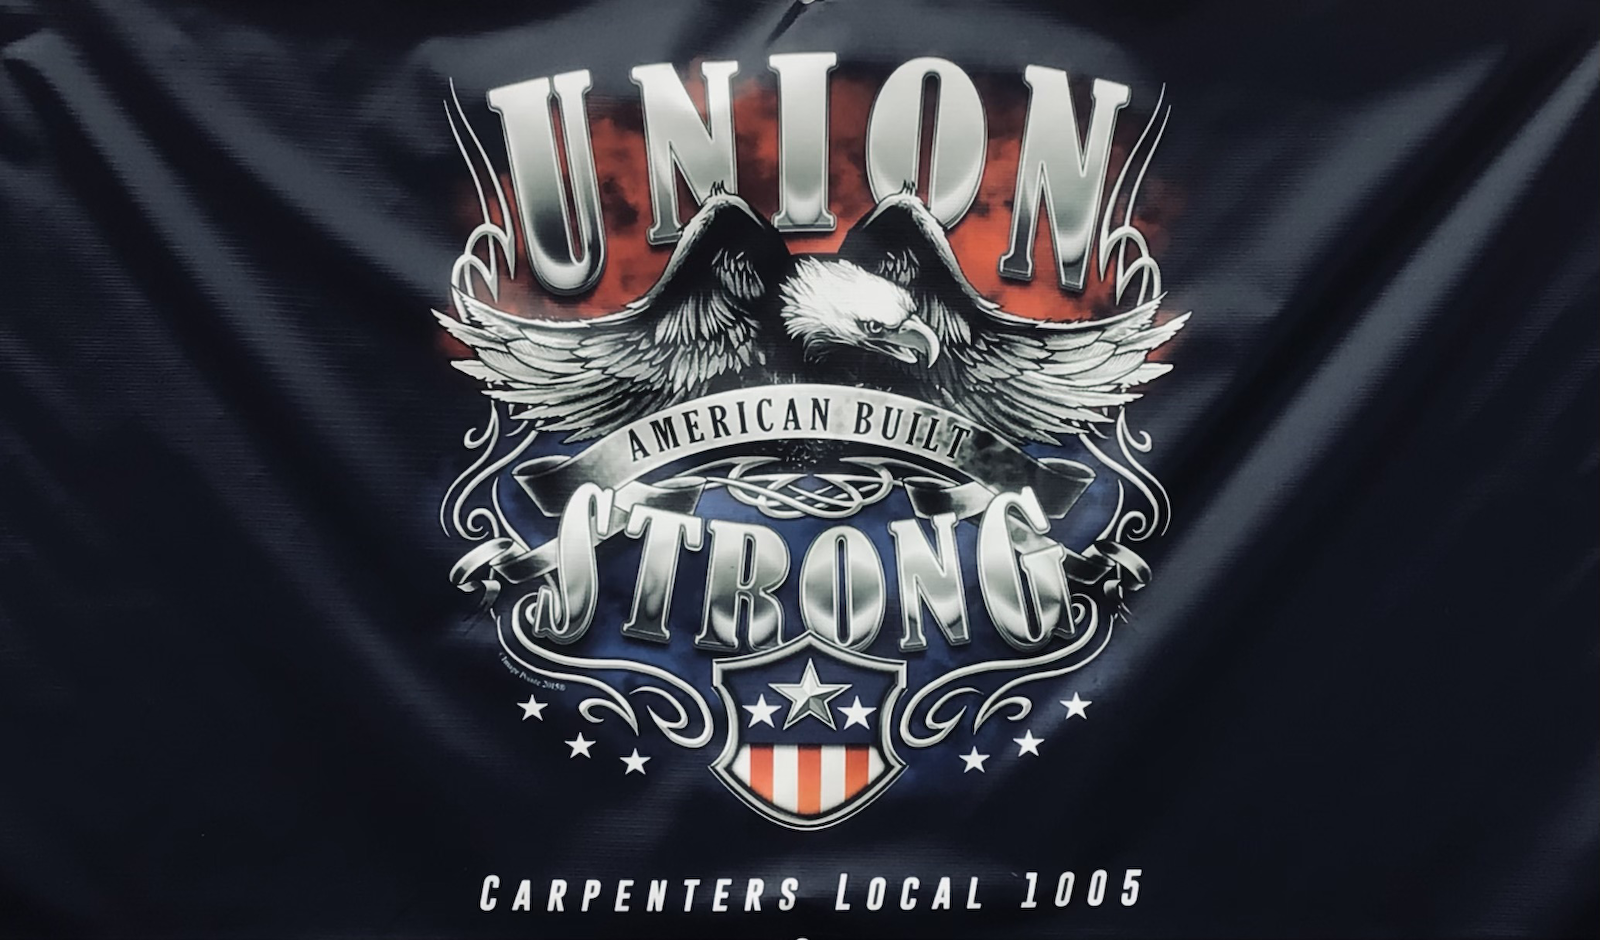 Local Union 1005